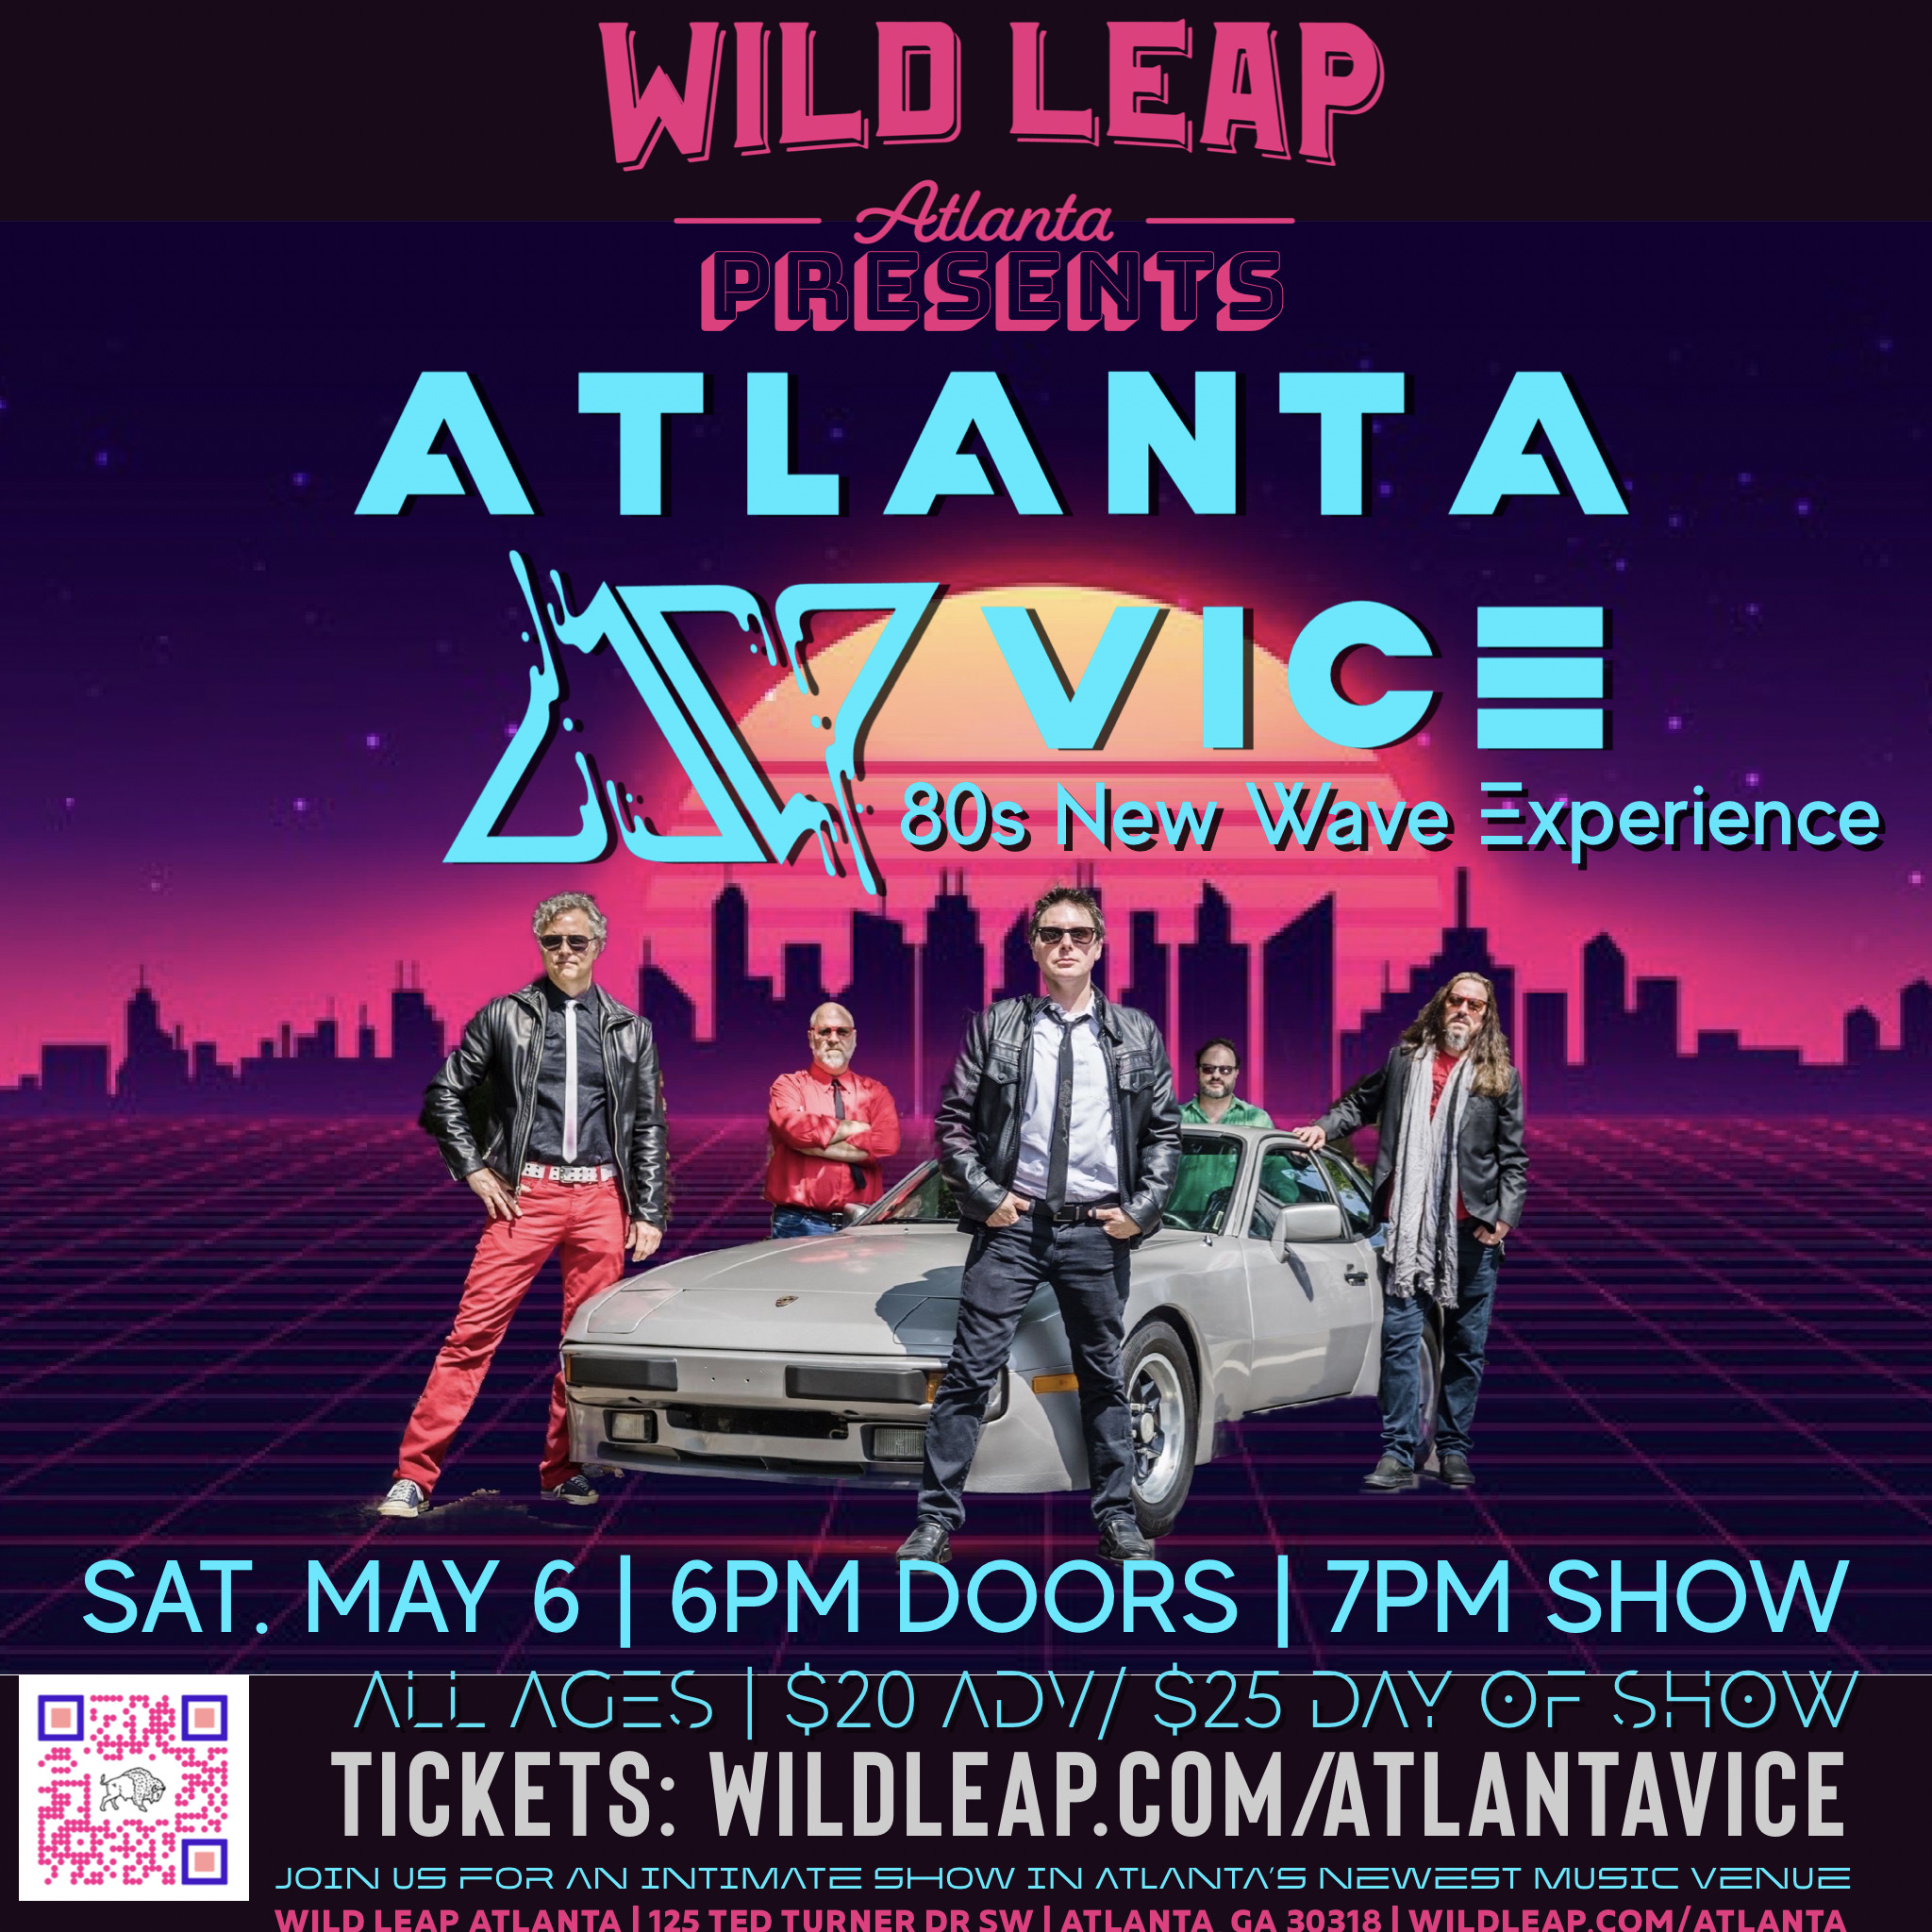 Atlanta Vice - Wild Leap Atlanta